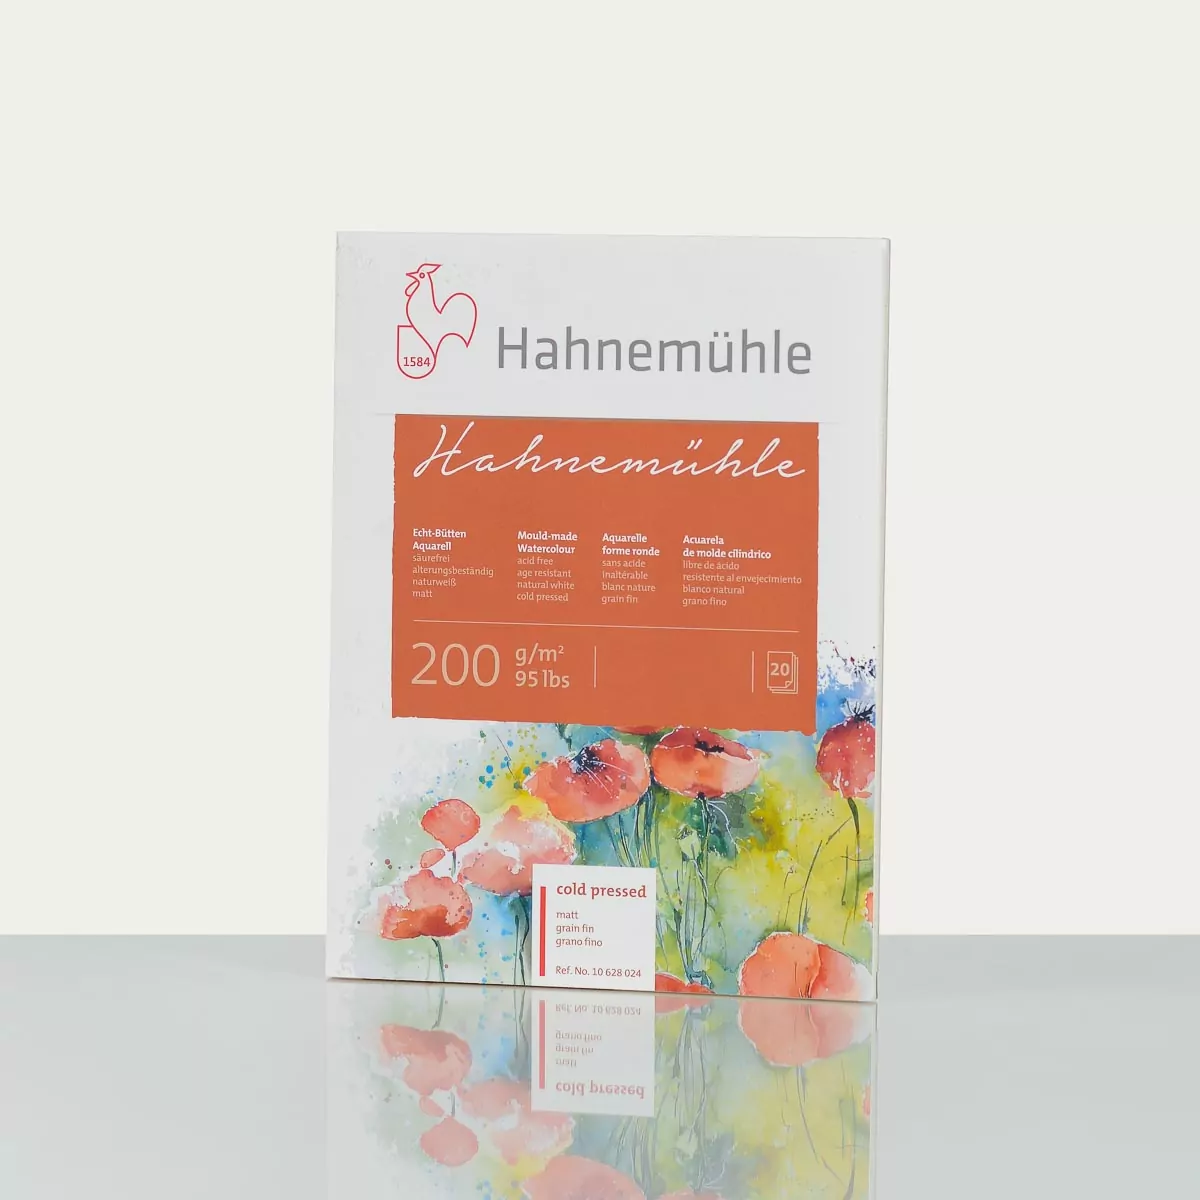 Traditional Hahnemuhle WatercolourBlock “Hahnemuhle” matt 200gsm 24x32cm (20 Sheets)